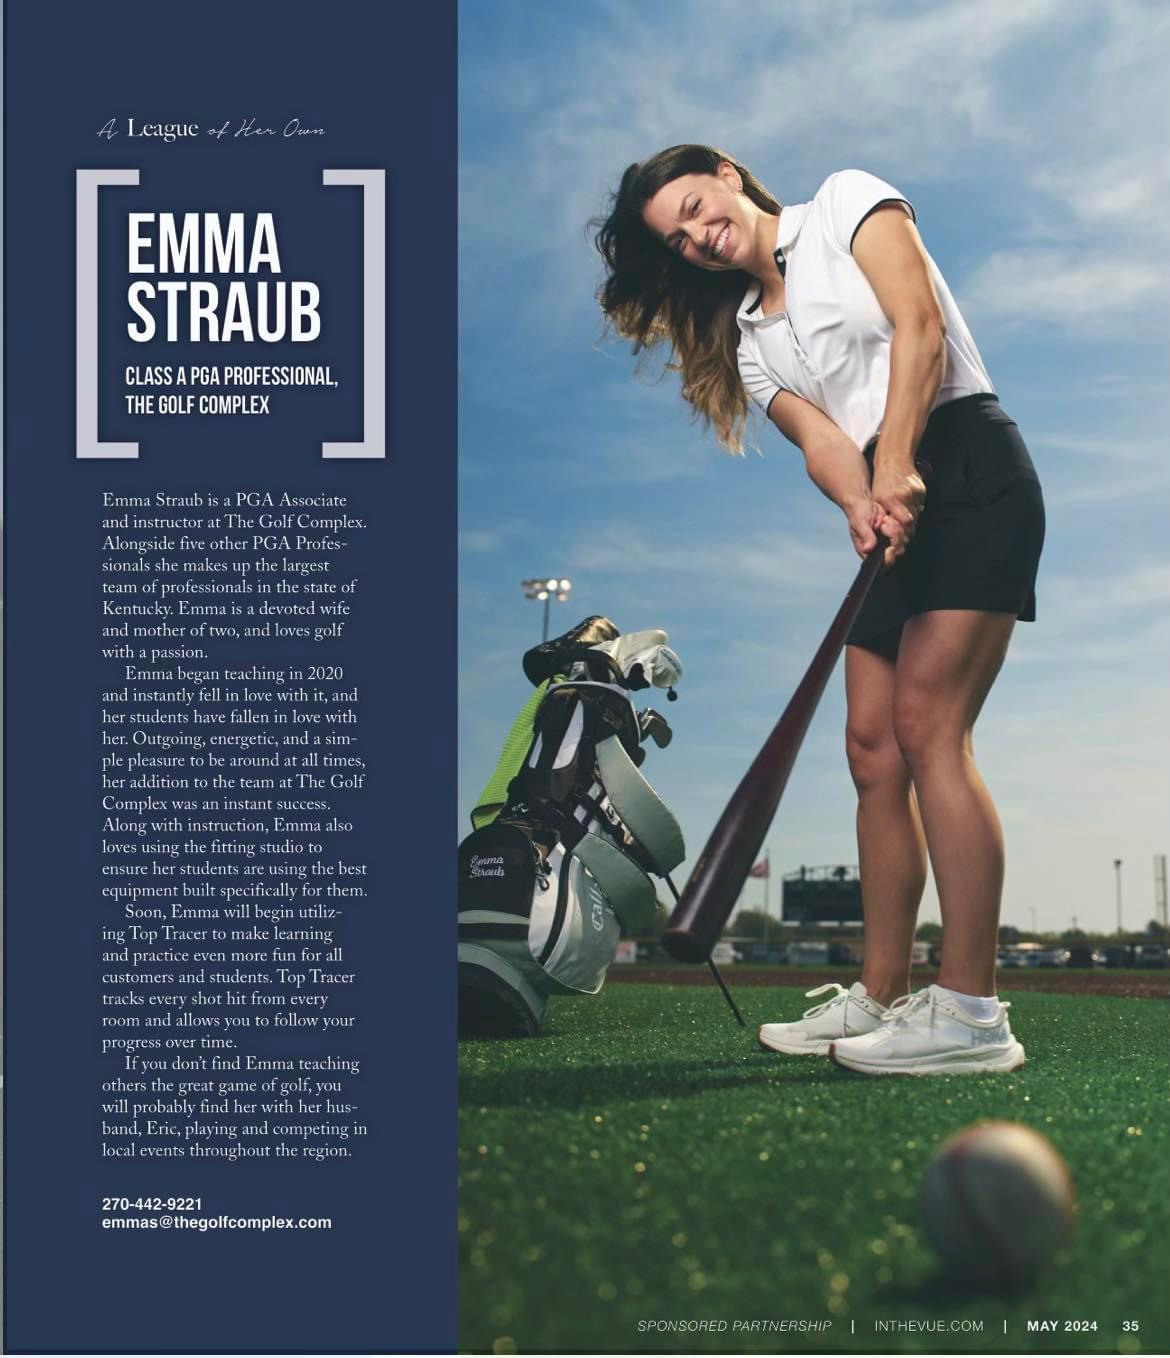 Emma Straub Golf Lessons at the golf complex